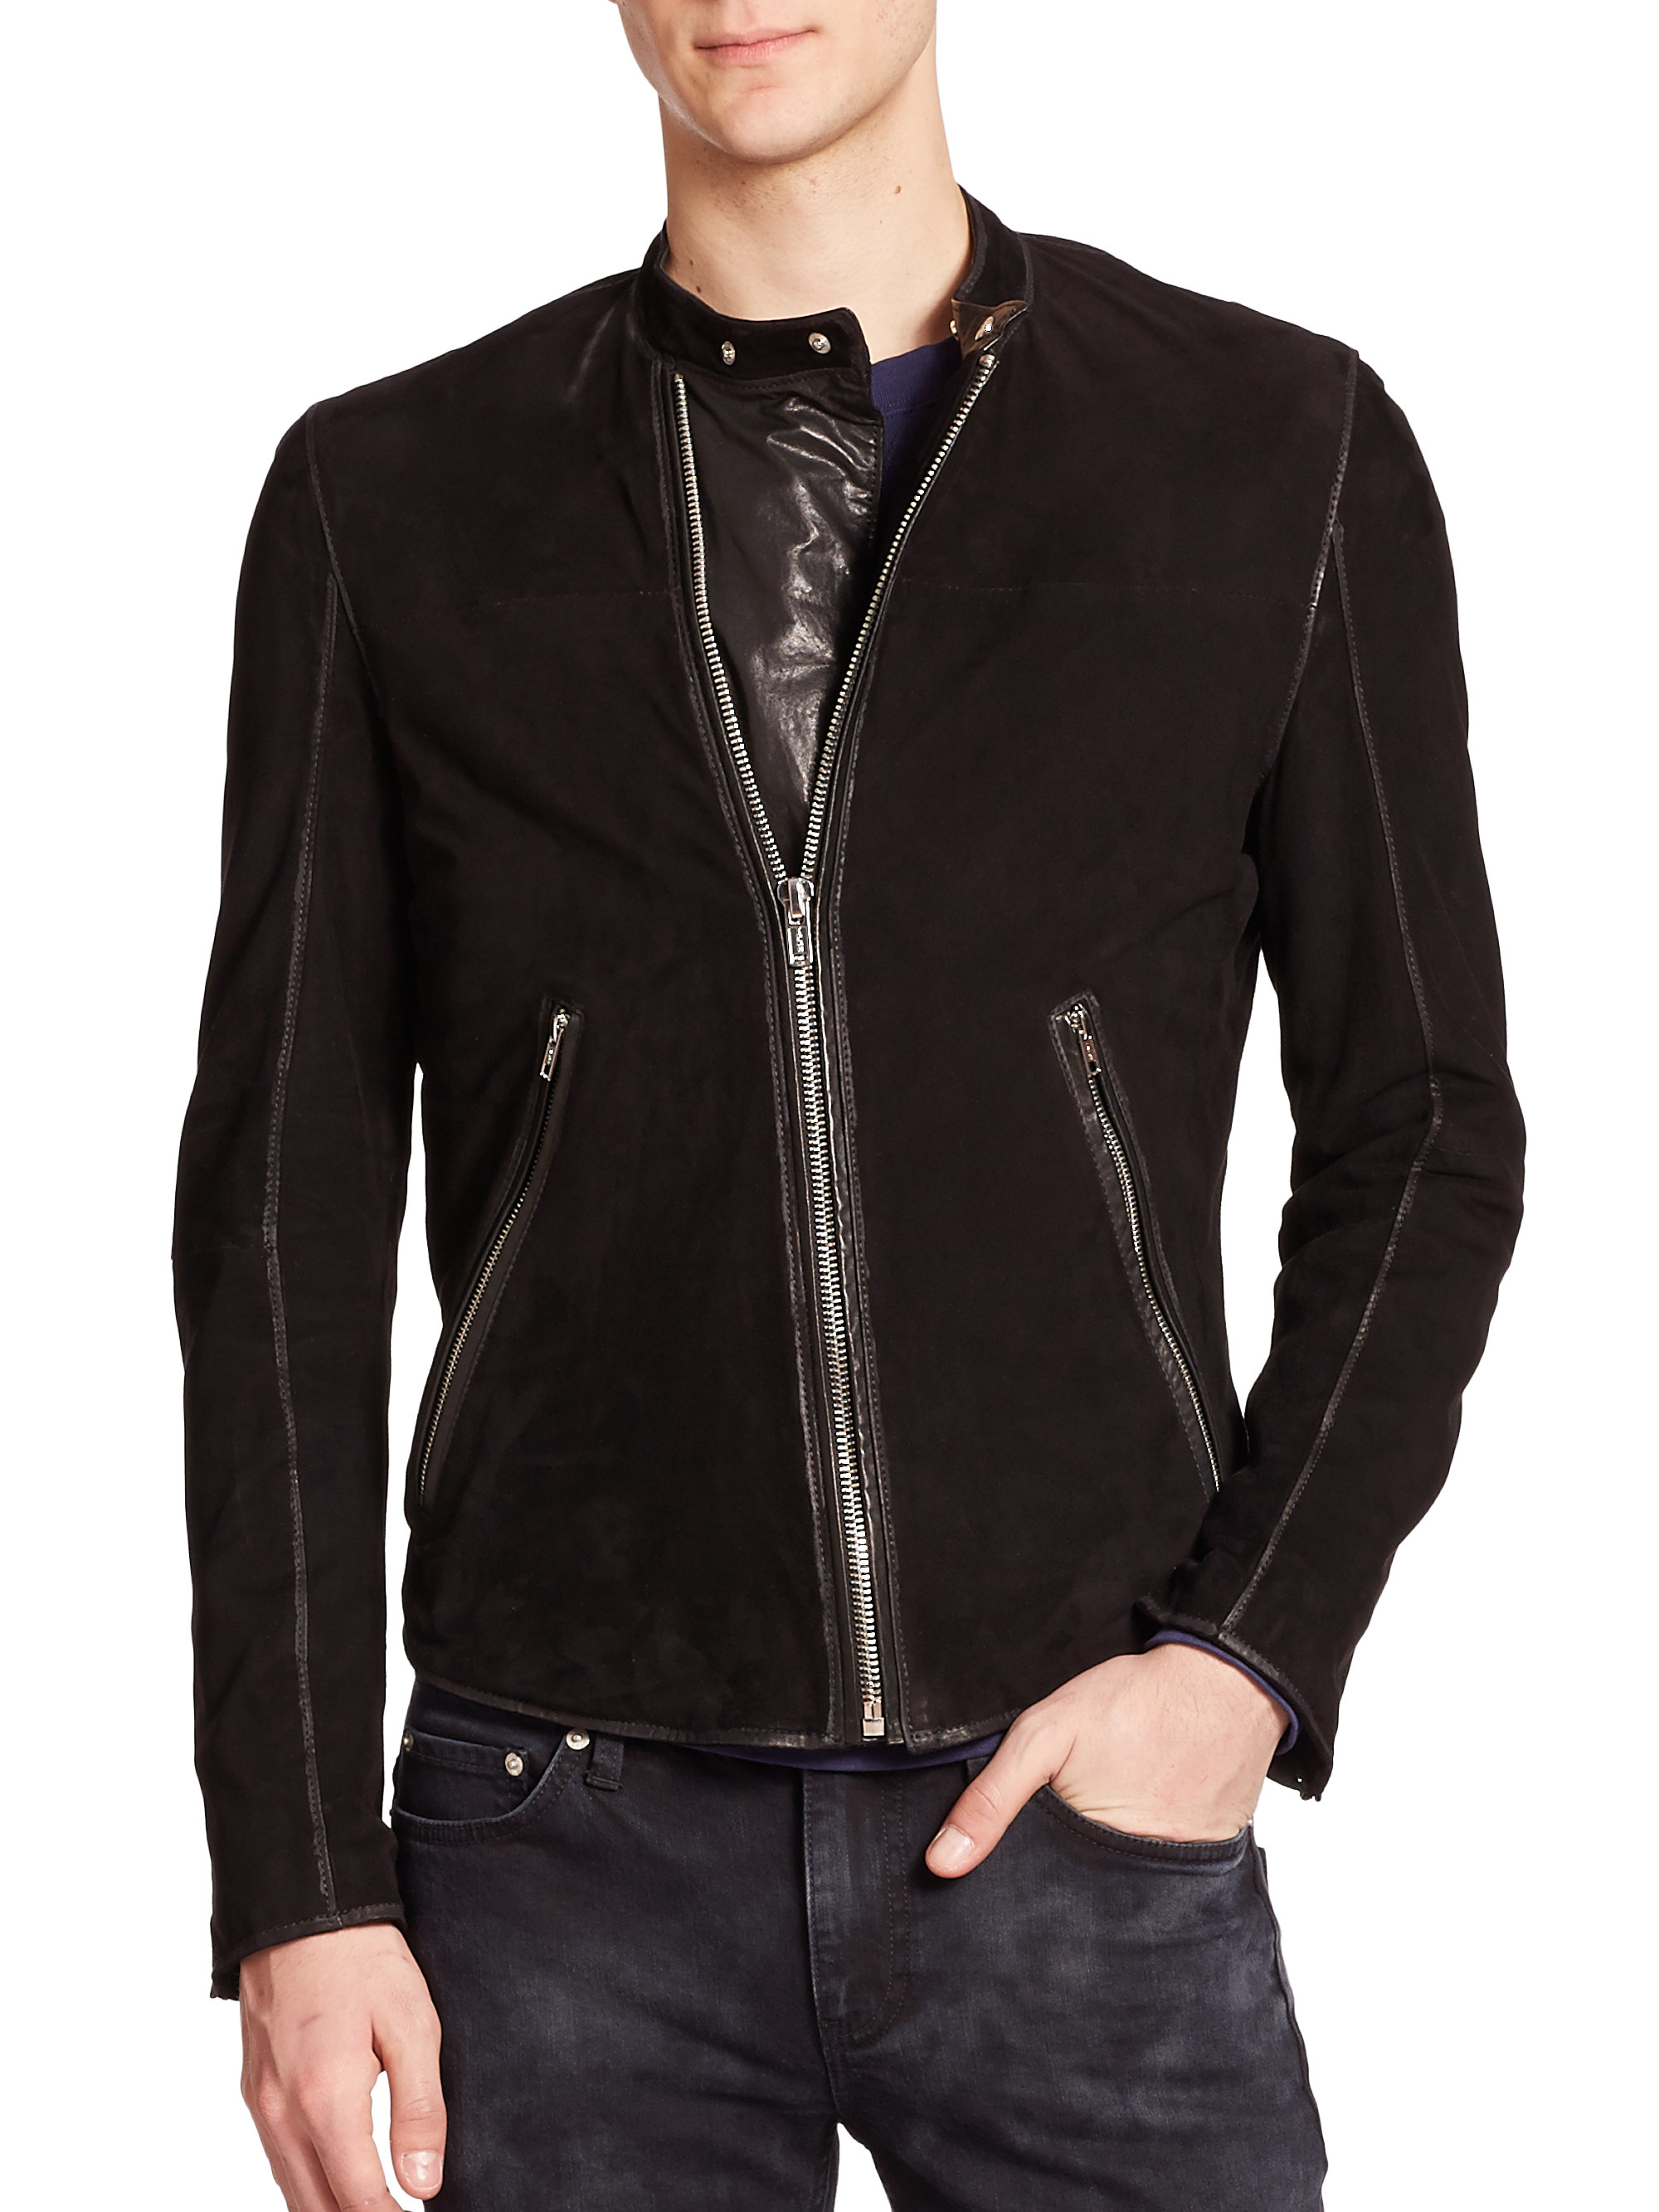 BLK DNM Leather-trimmed Suede Jacket in Black for Men - Lyst